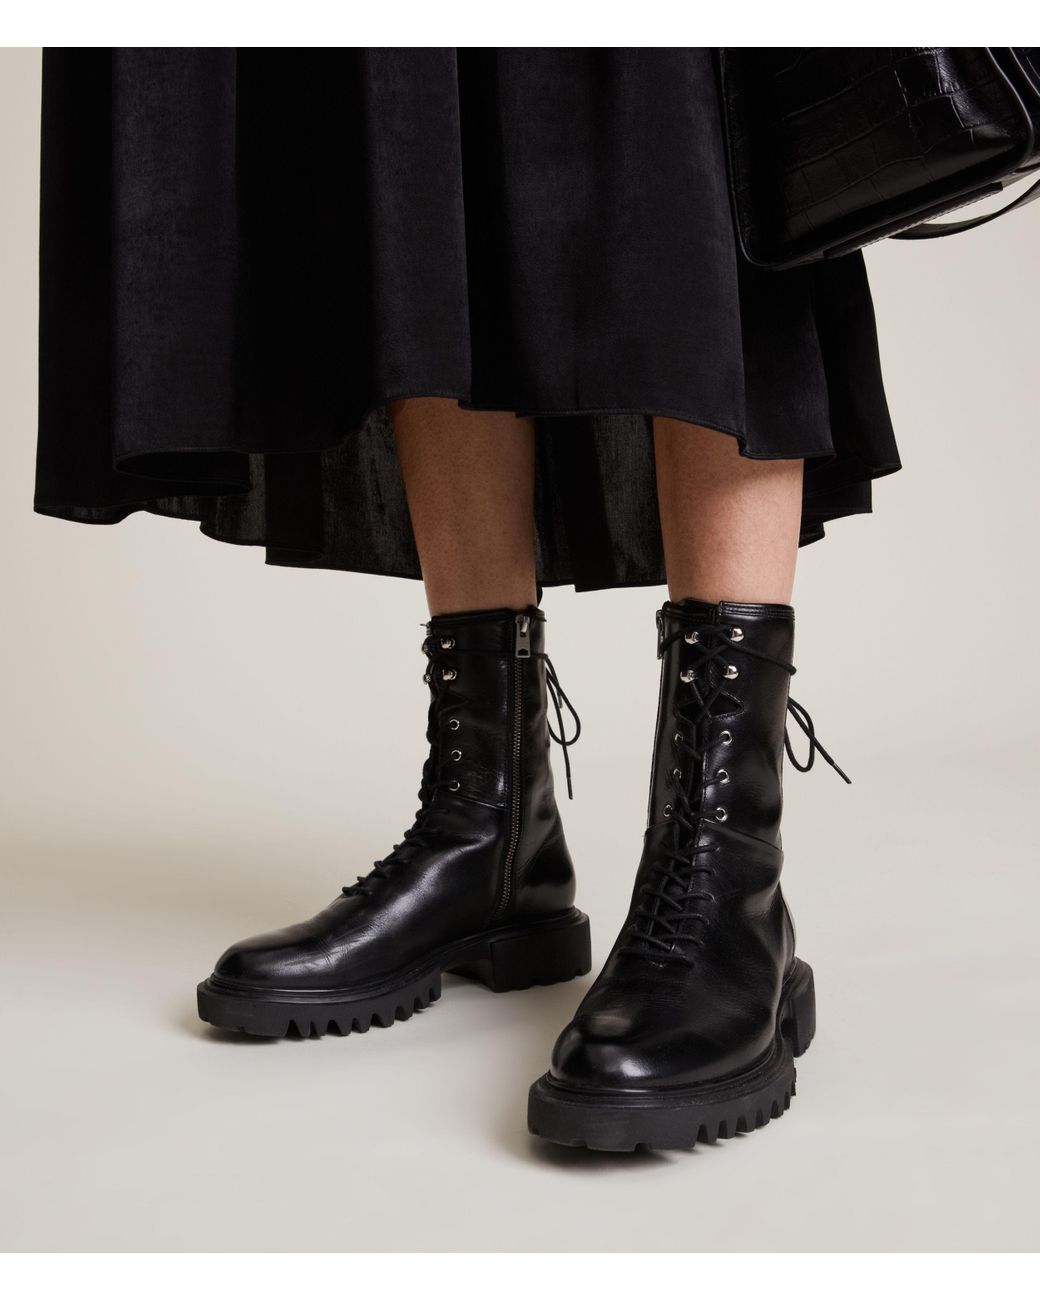 AllSaints Maren Leather Boots in Black | Lyst